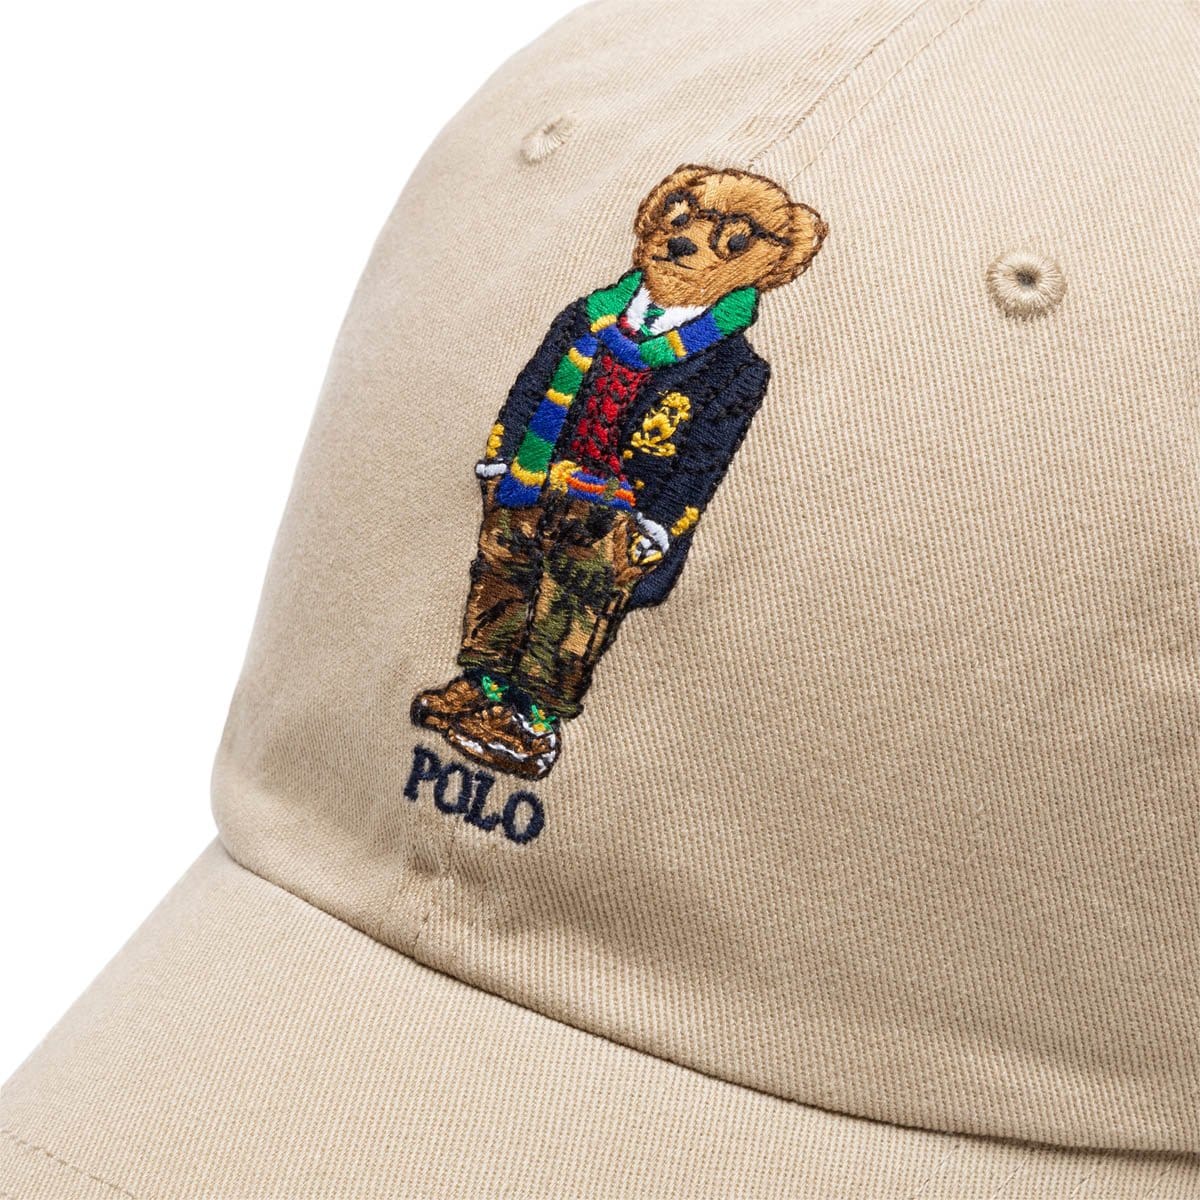 Polo Ralph Lauren Headwear CLASSIC KHAKI / O/S HAT